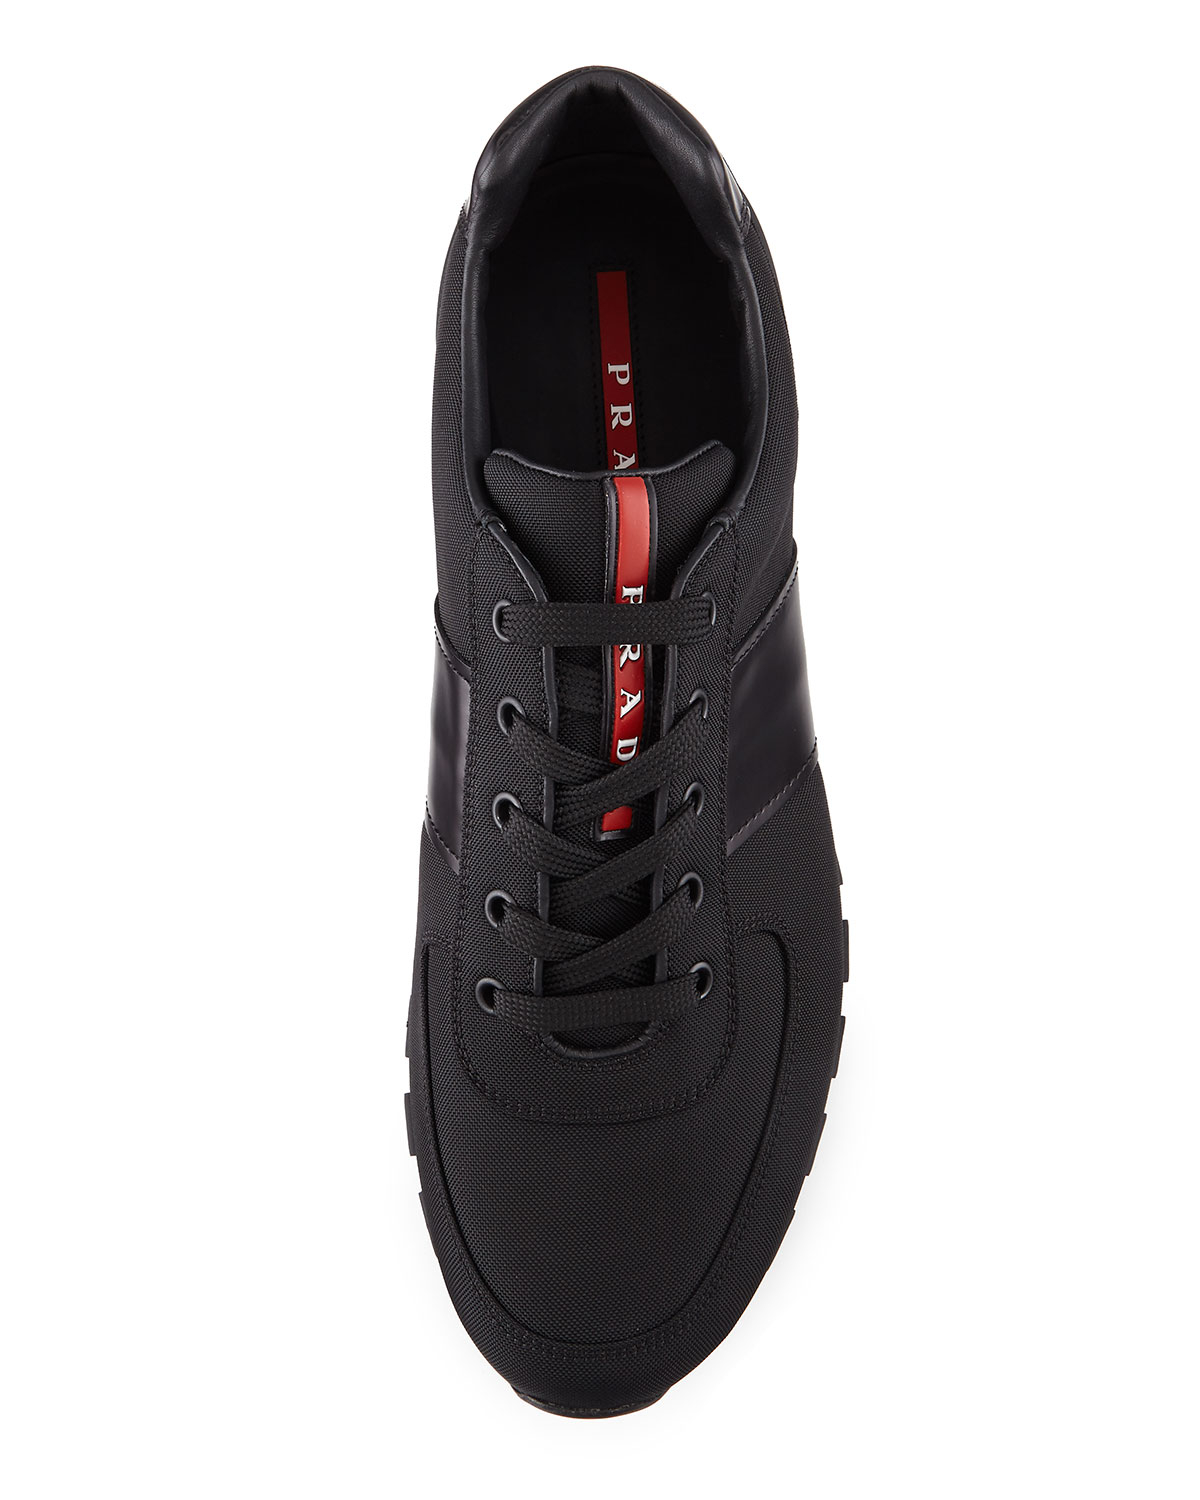 Lyst - Prada Leather-Detail Running Sneakers in Black for Men